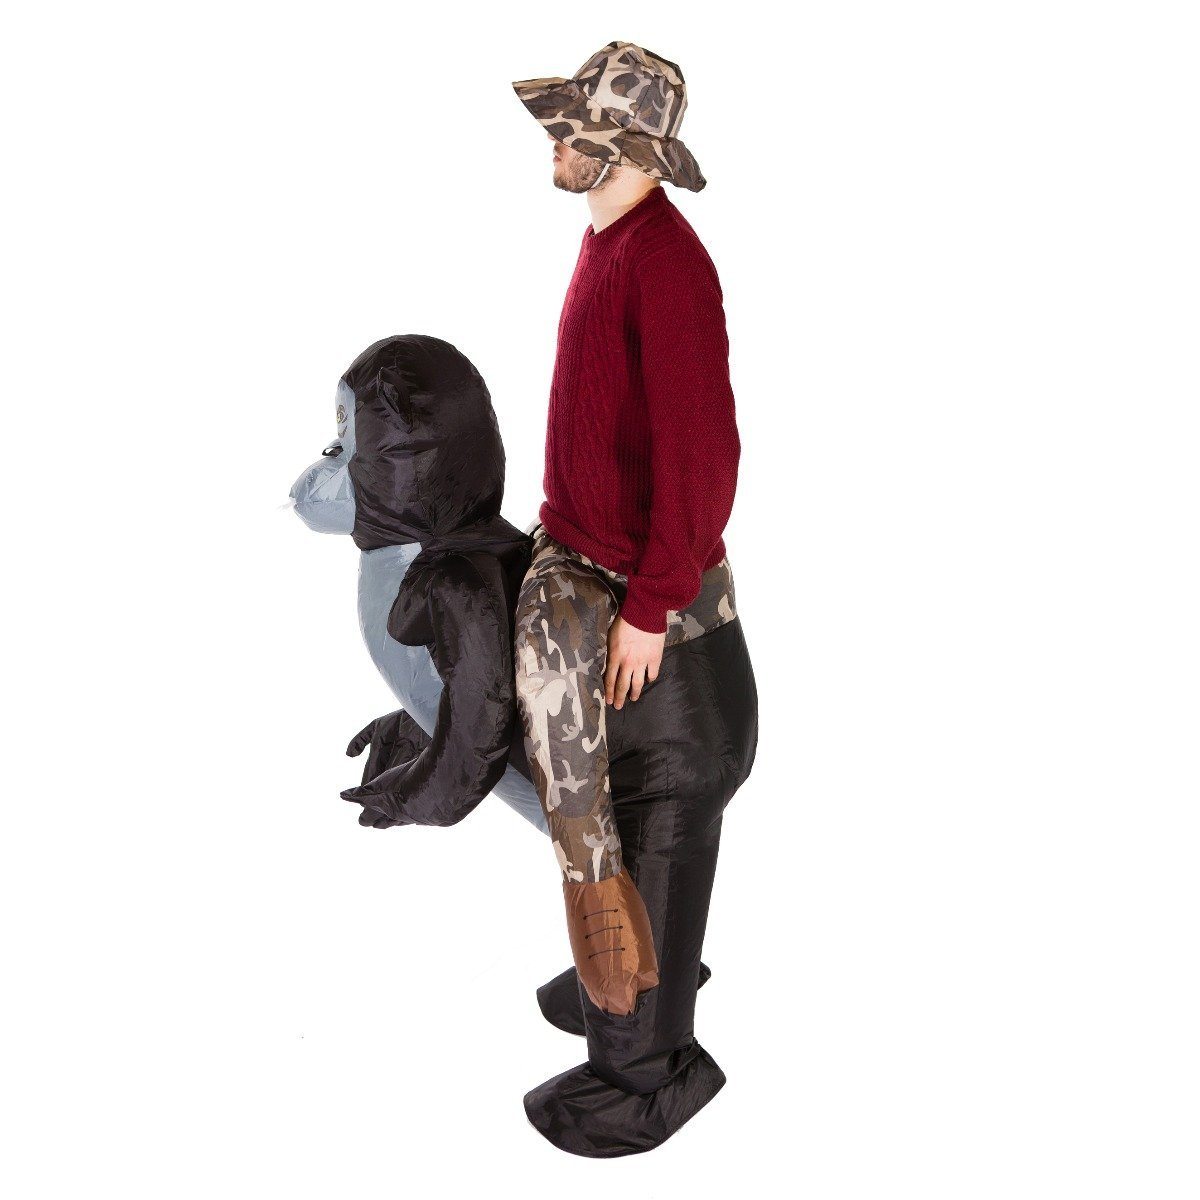 Fancy Dress - Inflatable Gorilla Costume